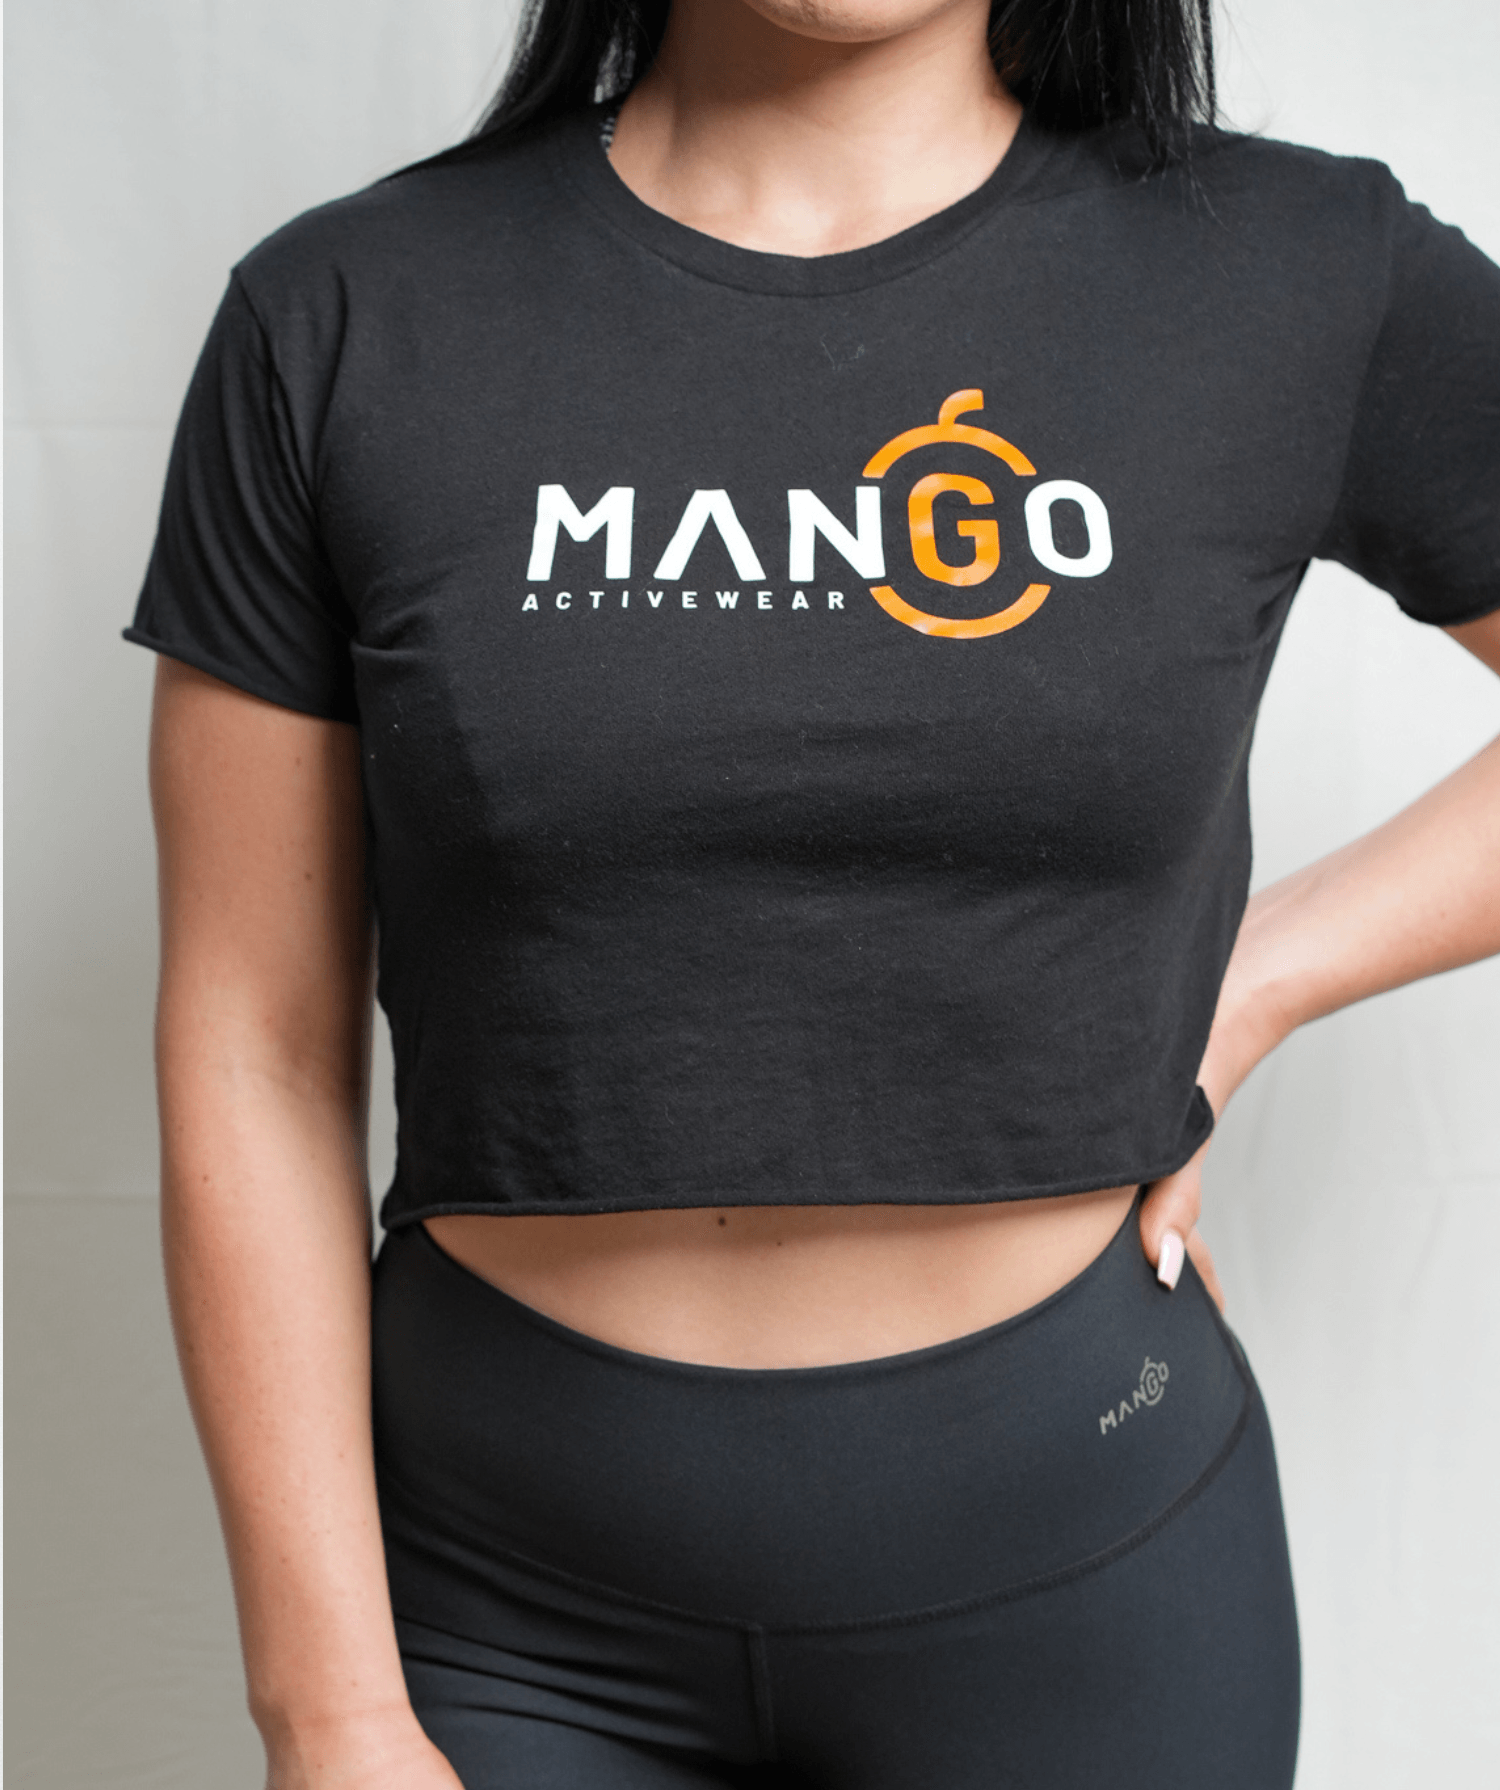 Latterlig Foragt jeans Mango Logo Top – Mango Activewear